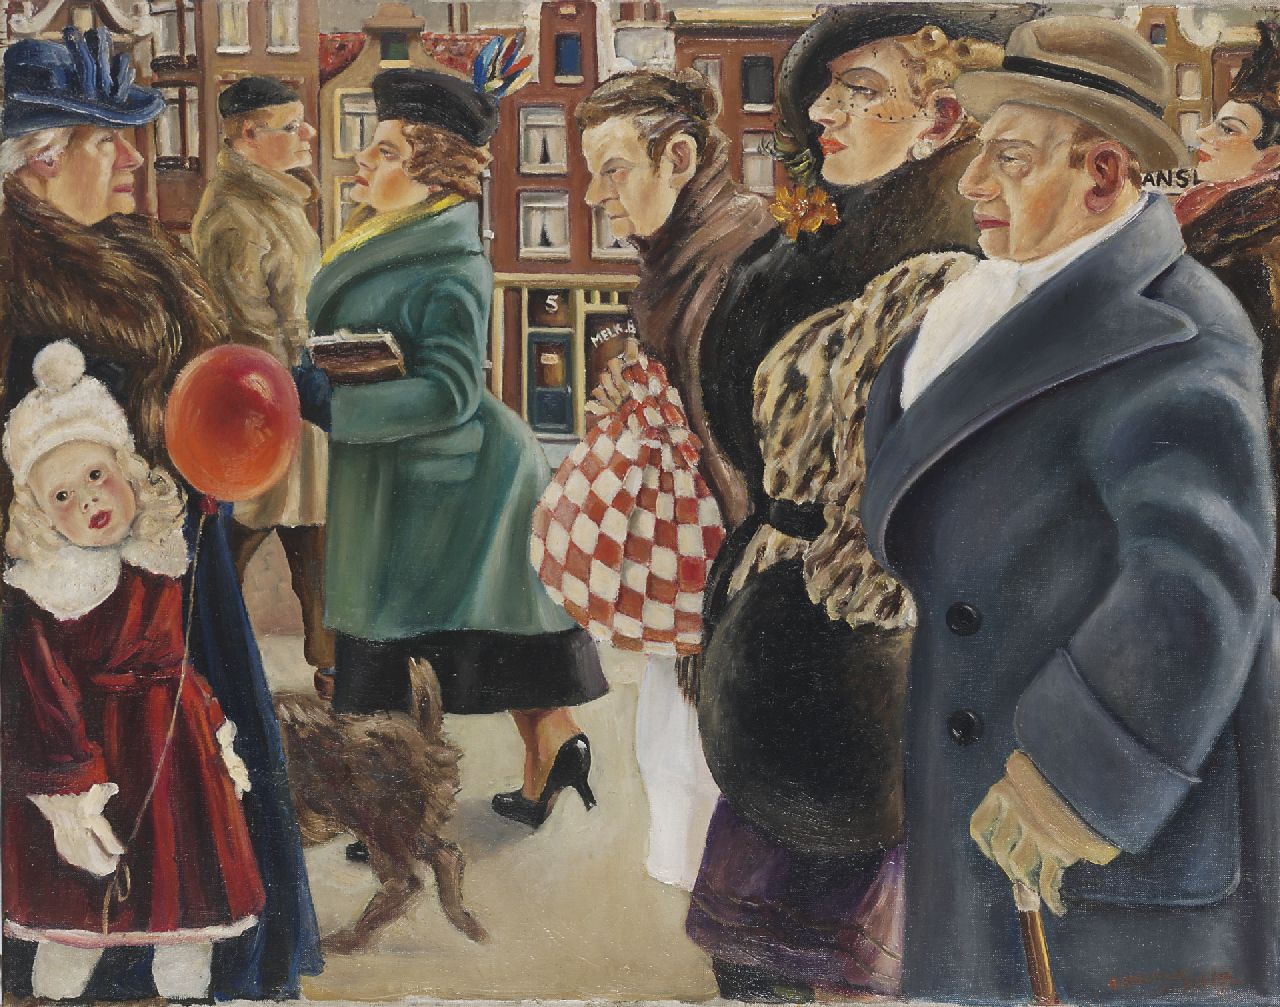 Gelder R. van | Rebecca 'Bobette' van Gelder, Figures on a side-walk, oil on canvas 75.4 x 95.8 cm, signed l.r.. met pseudonym 'B. Stratthon van Gelder' and dated '39